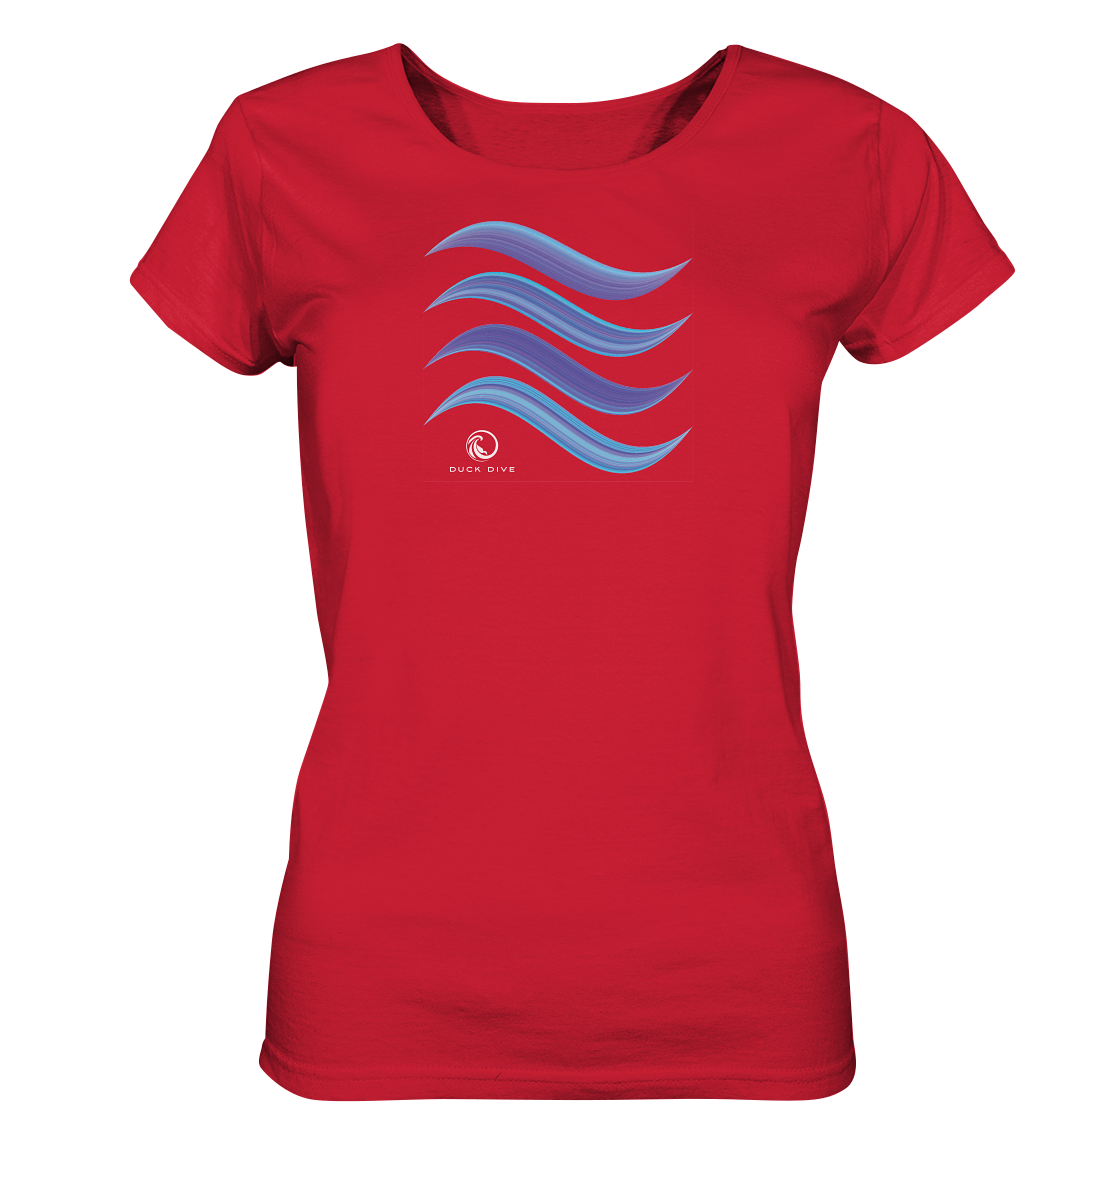 Four Waves II - Ladies Organic Shirt - Duck Dive Clothing